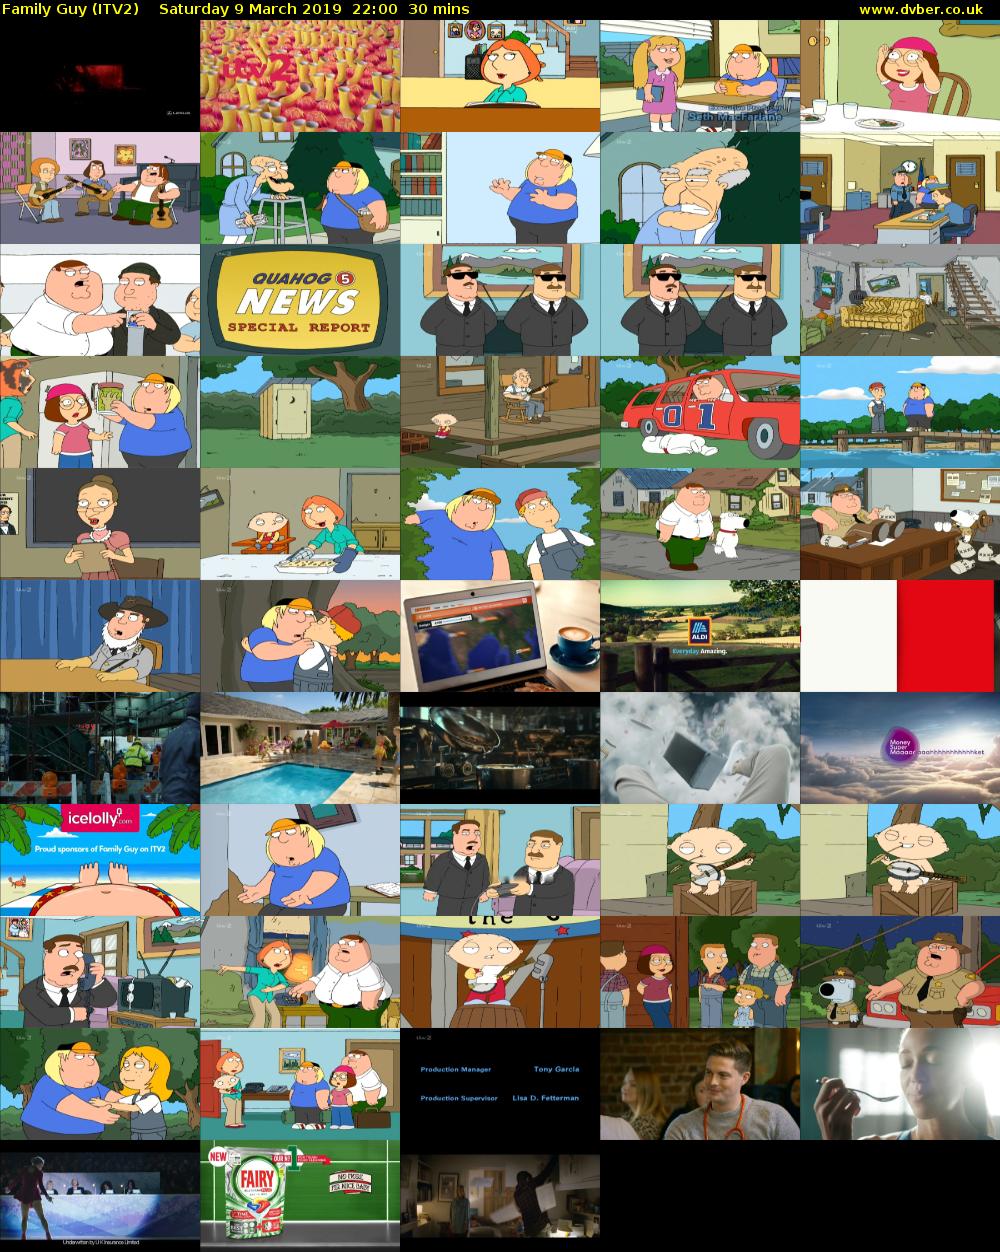 Family Guy (ITV2) Saturday 9 March 2019 22:00 - 22:30